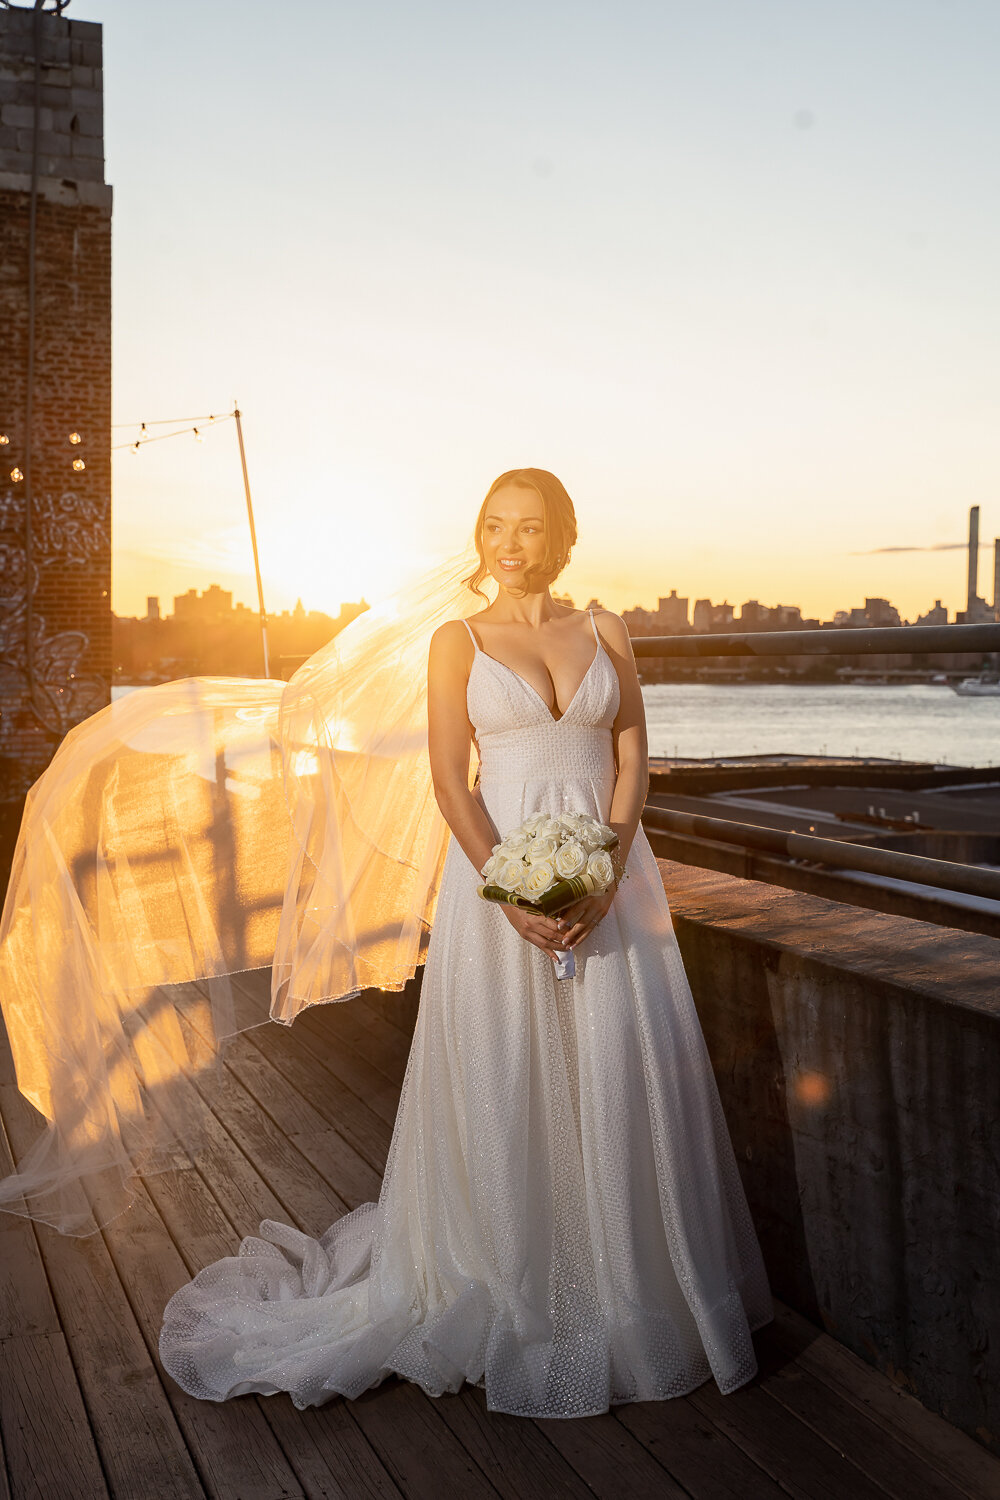 Greenpoint-lofts-brooklyn-newyork-rustic-wedding-28.jpg